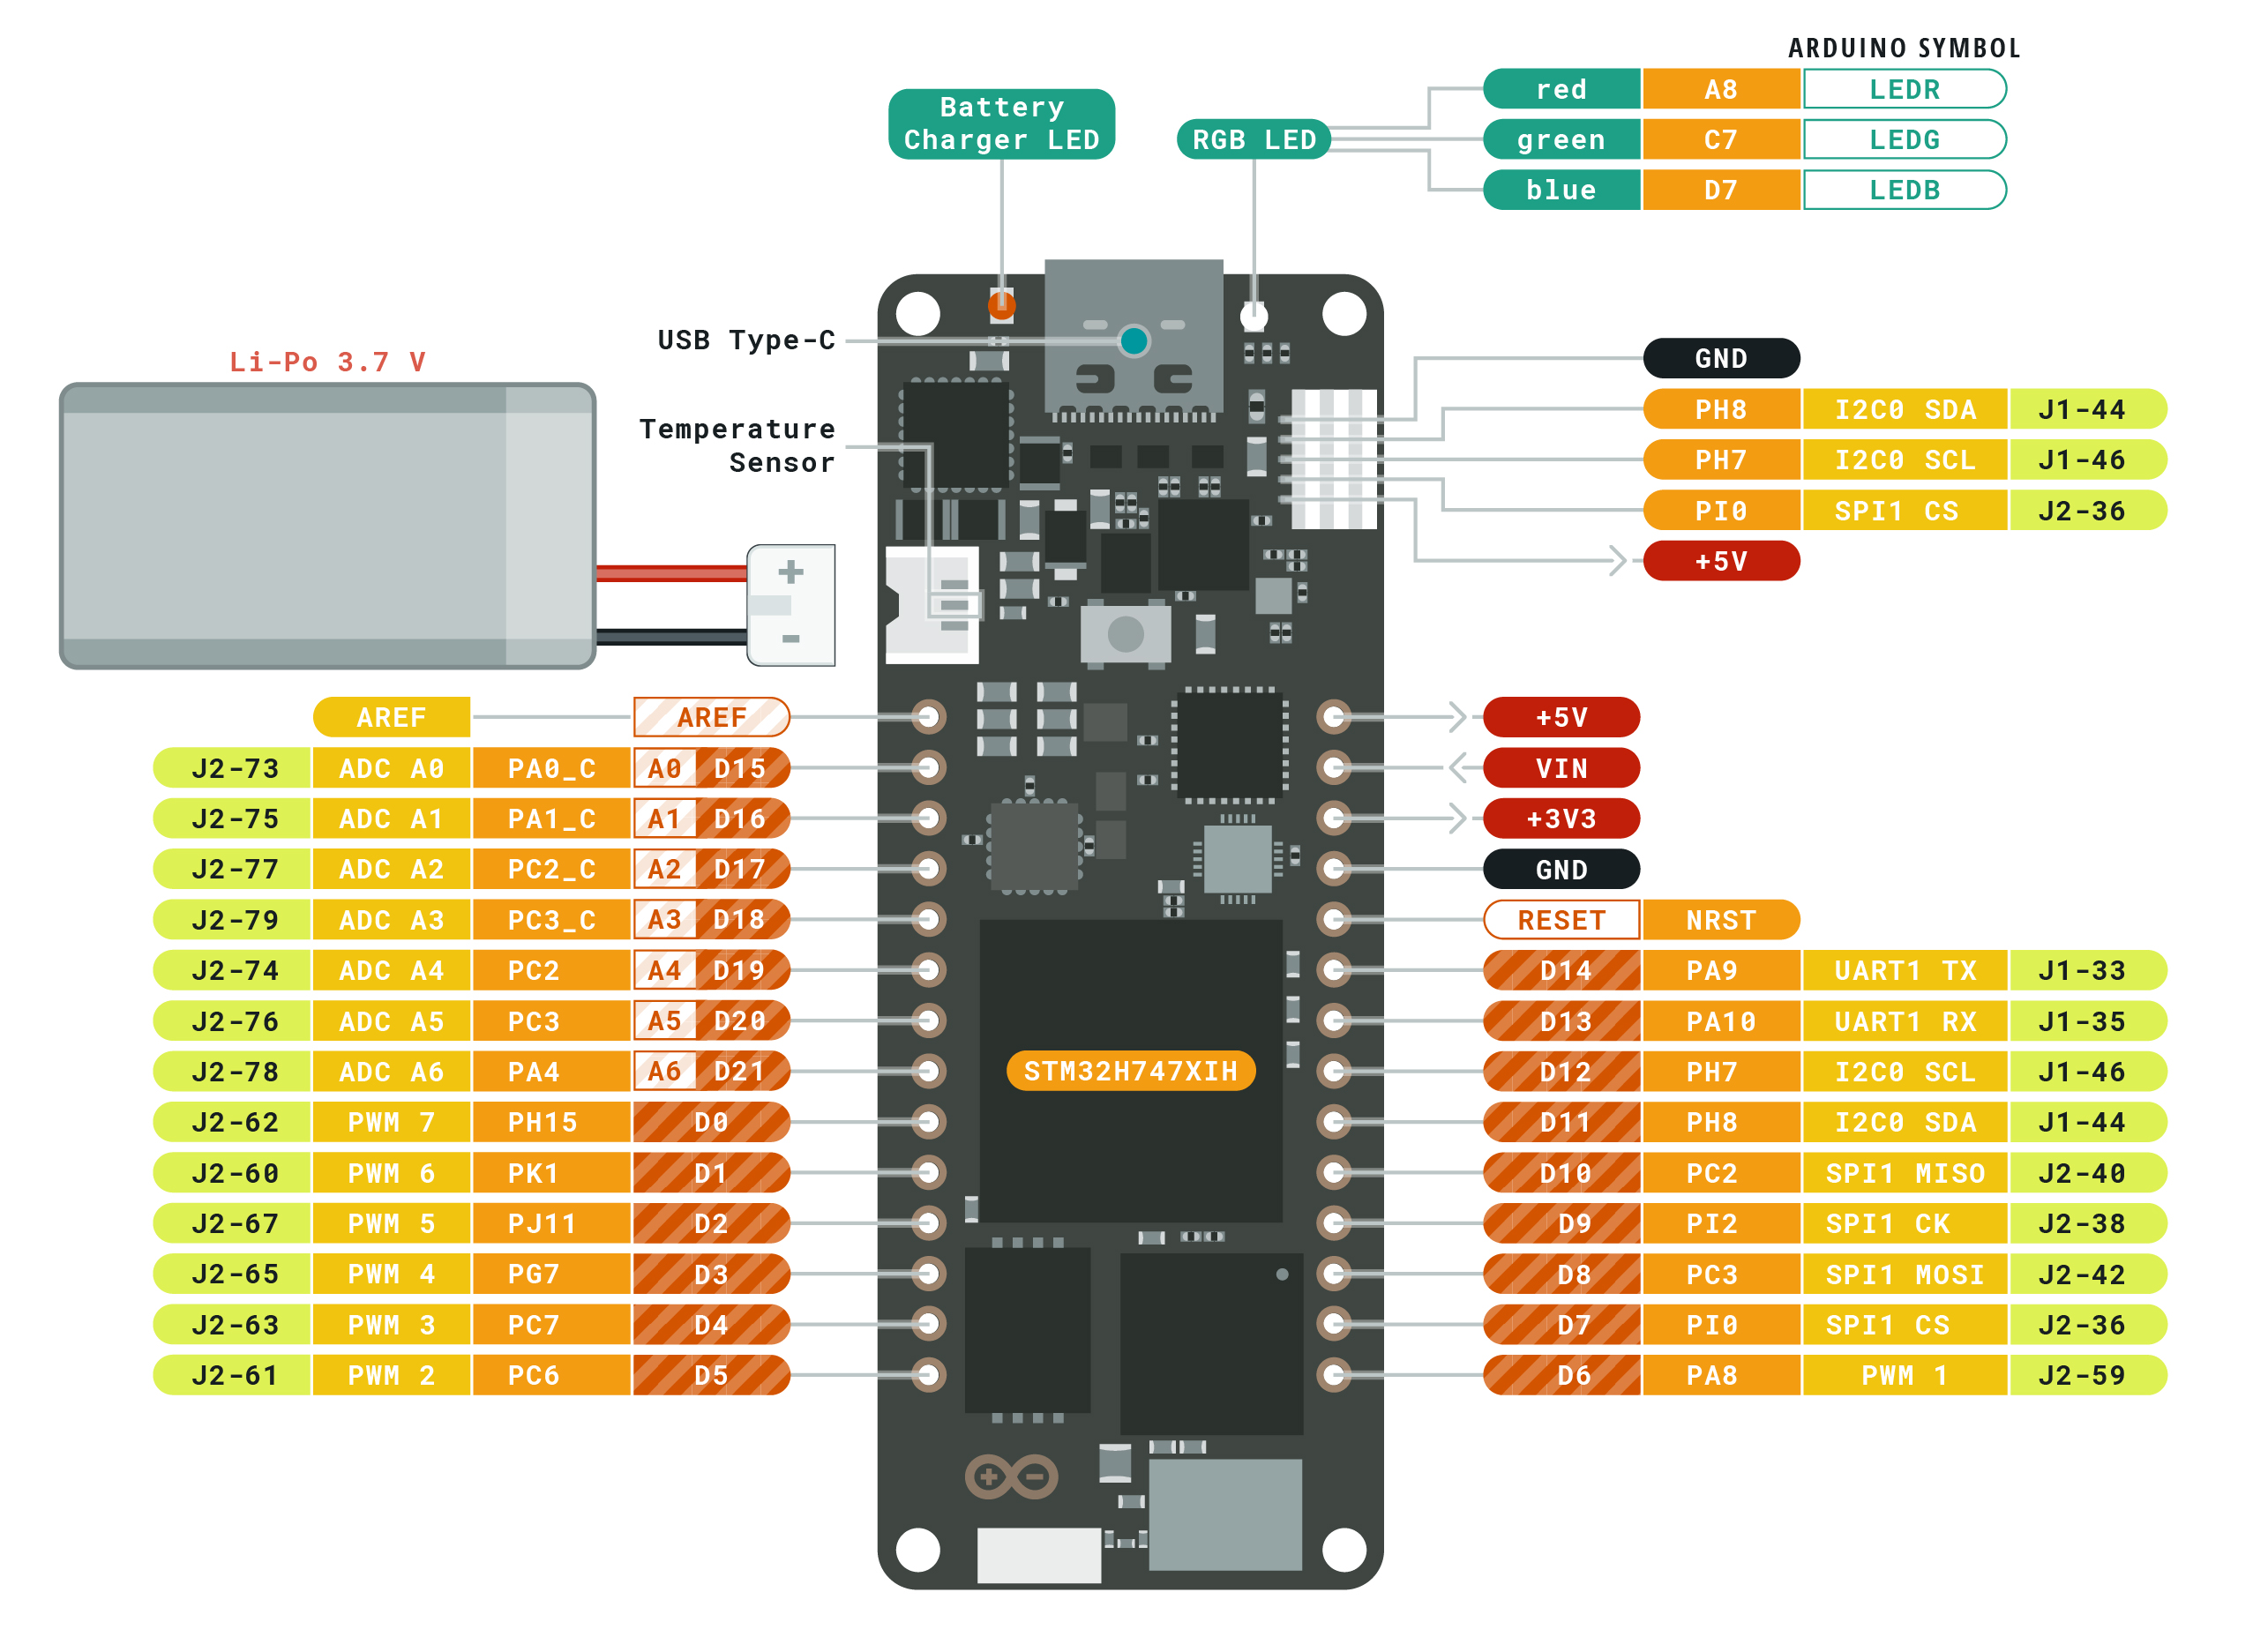 Arduino Portenta H7 32-Bit ARM Microcontroller - Click to Enlarge